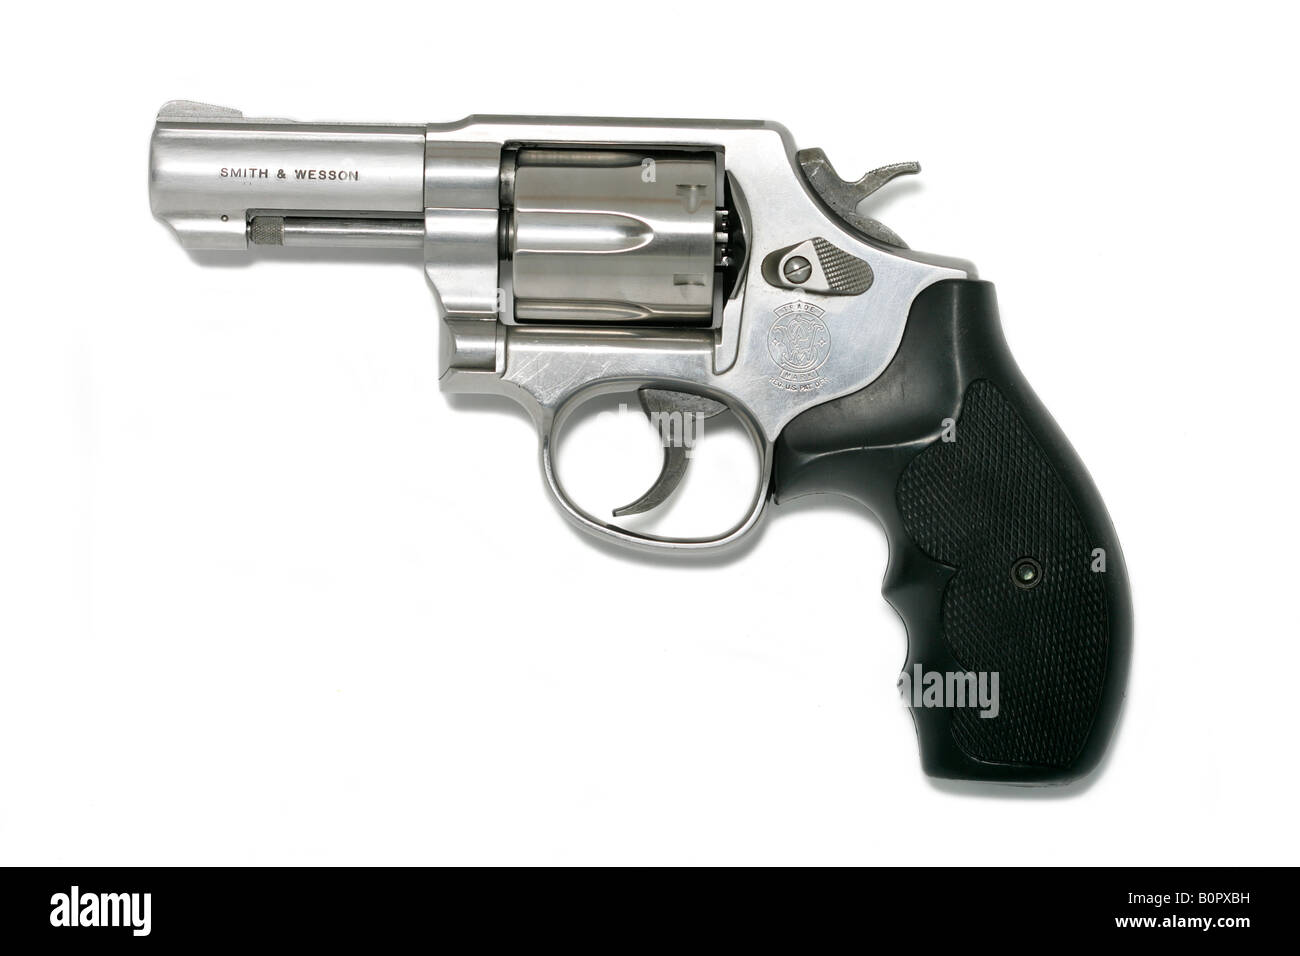 Smith & Wesson SW 65 Pistole Pistole Handpistole Stockfoto